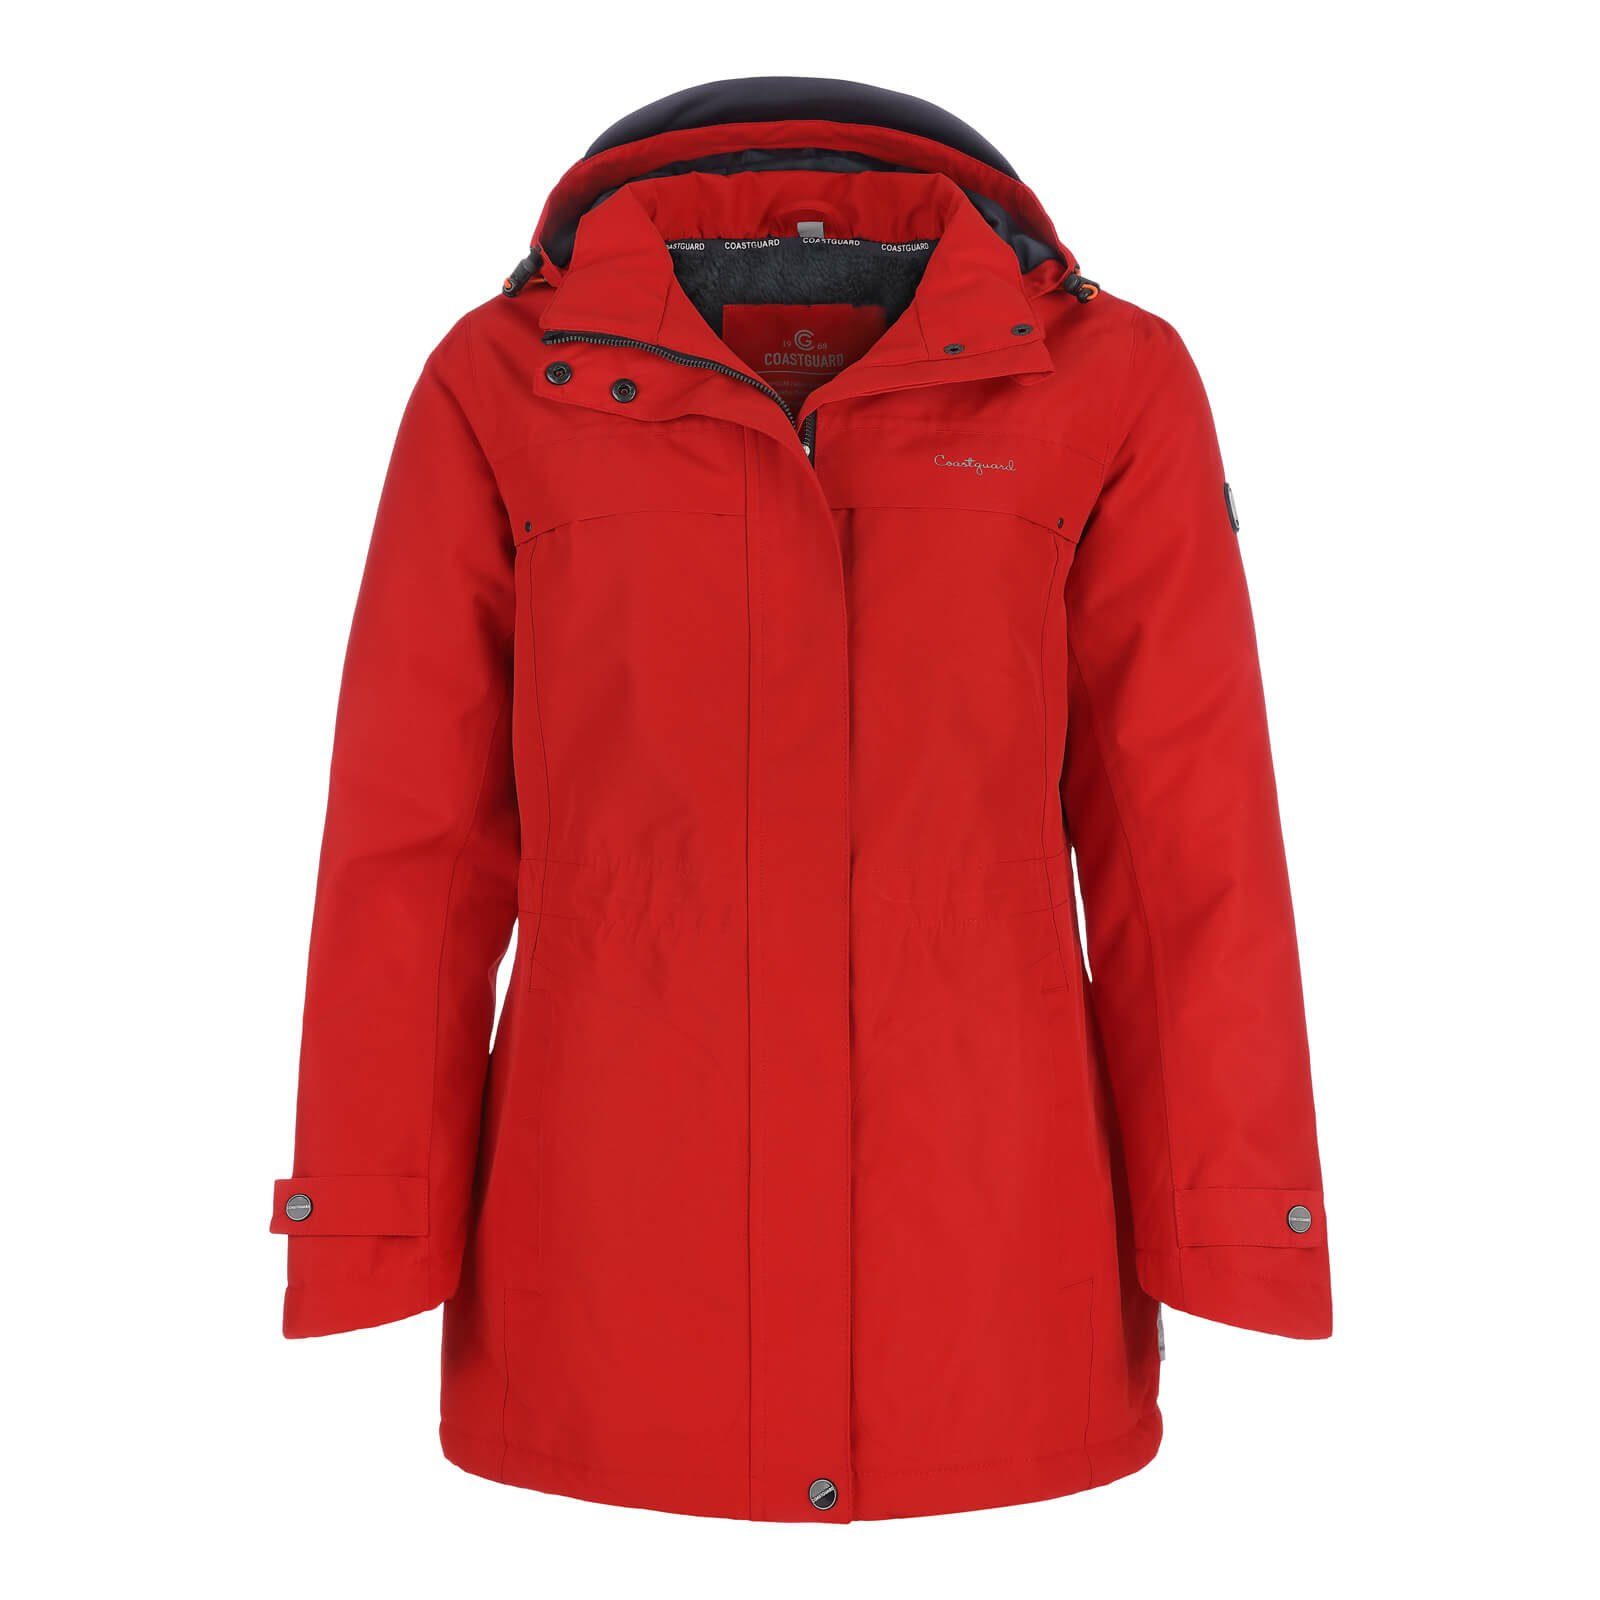 Coastguard Funktionsjacke Damen Outdoor-Jacke mit abnehmbarer Kapuze - wasserdicht atmungsaktiv rot